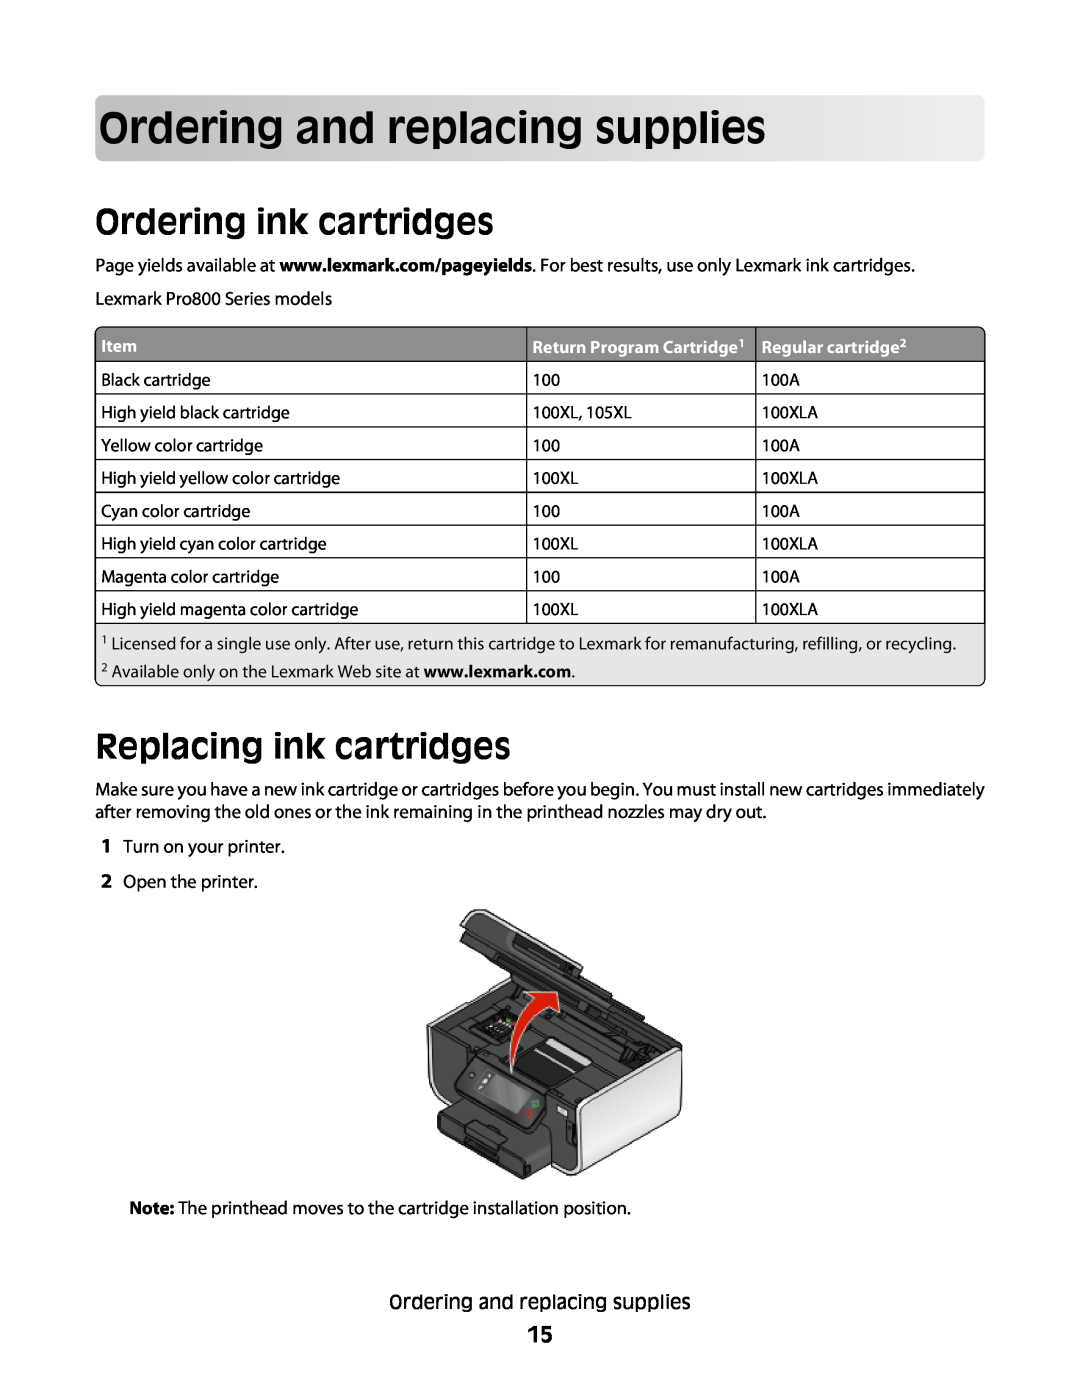 Lexmark Pro800, Pro803 manual Orderin gand replacingsupplies, Ordering ink cartridges, Replacing ink cartridges 